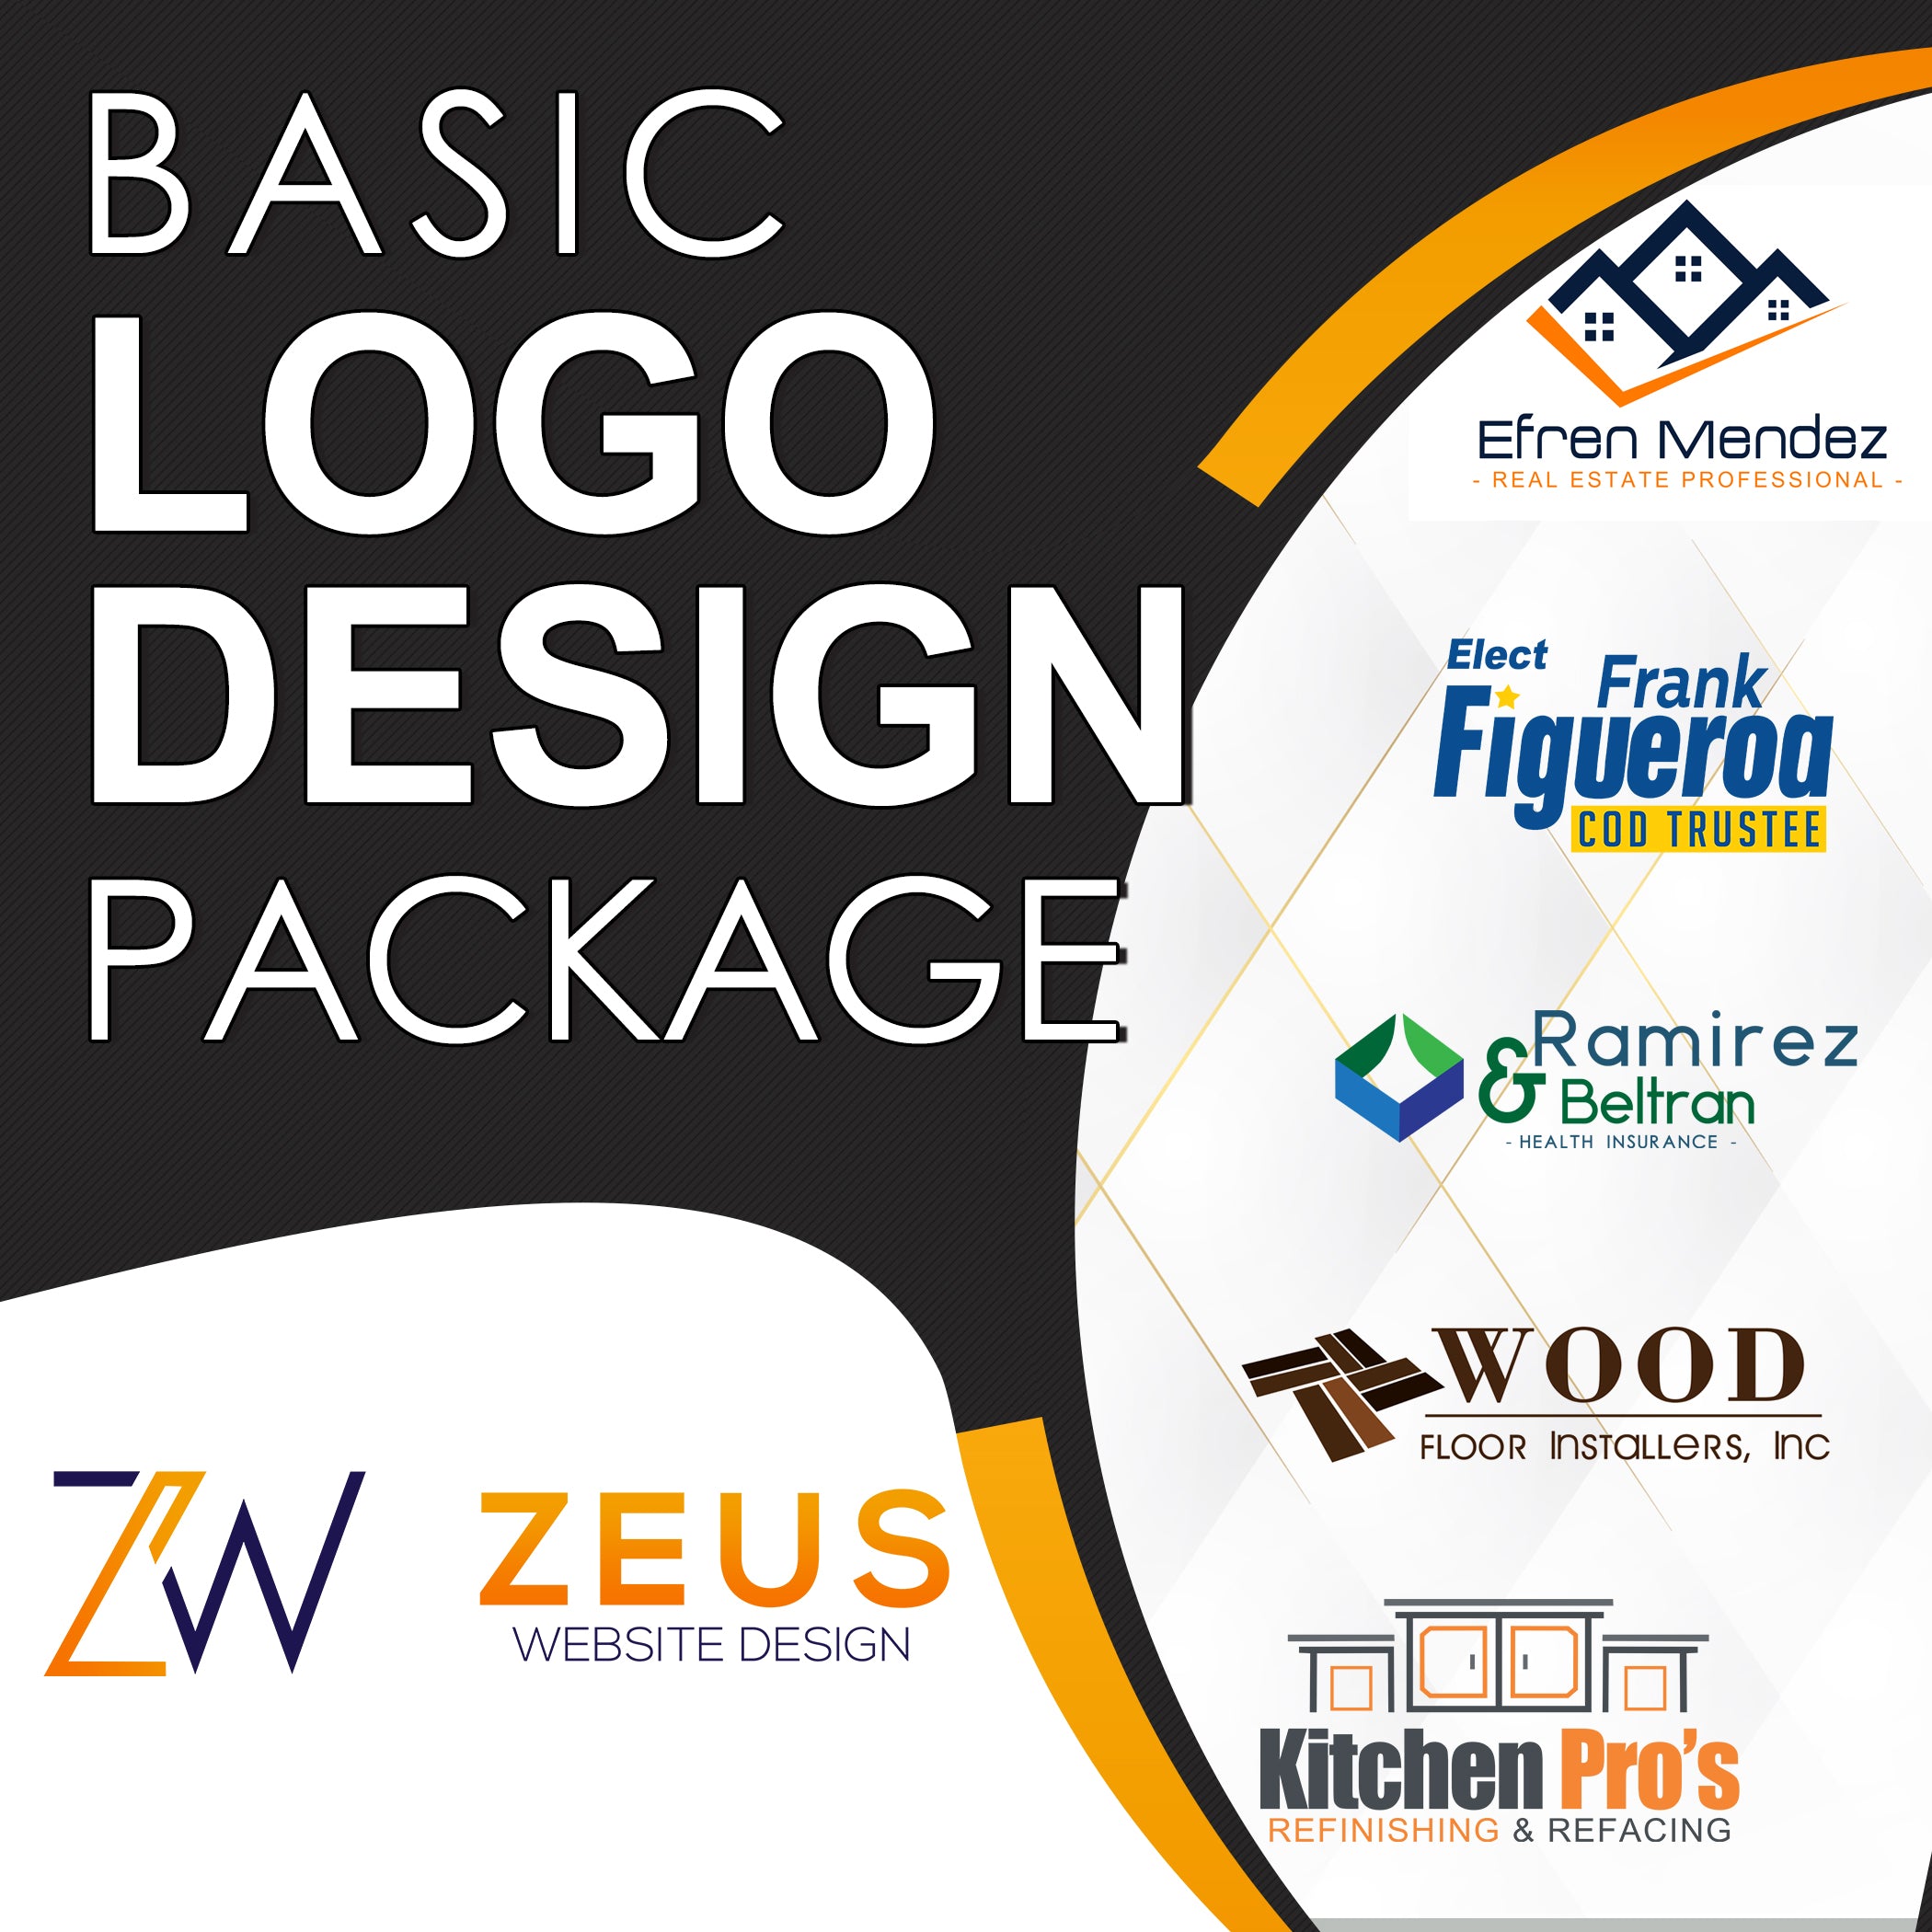 logo design basics